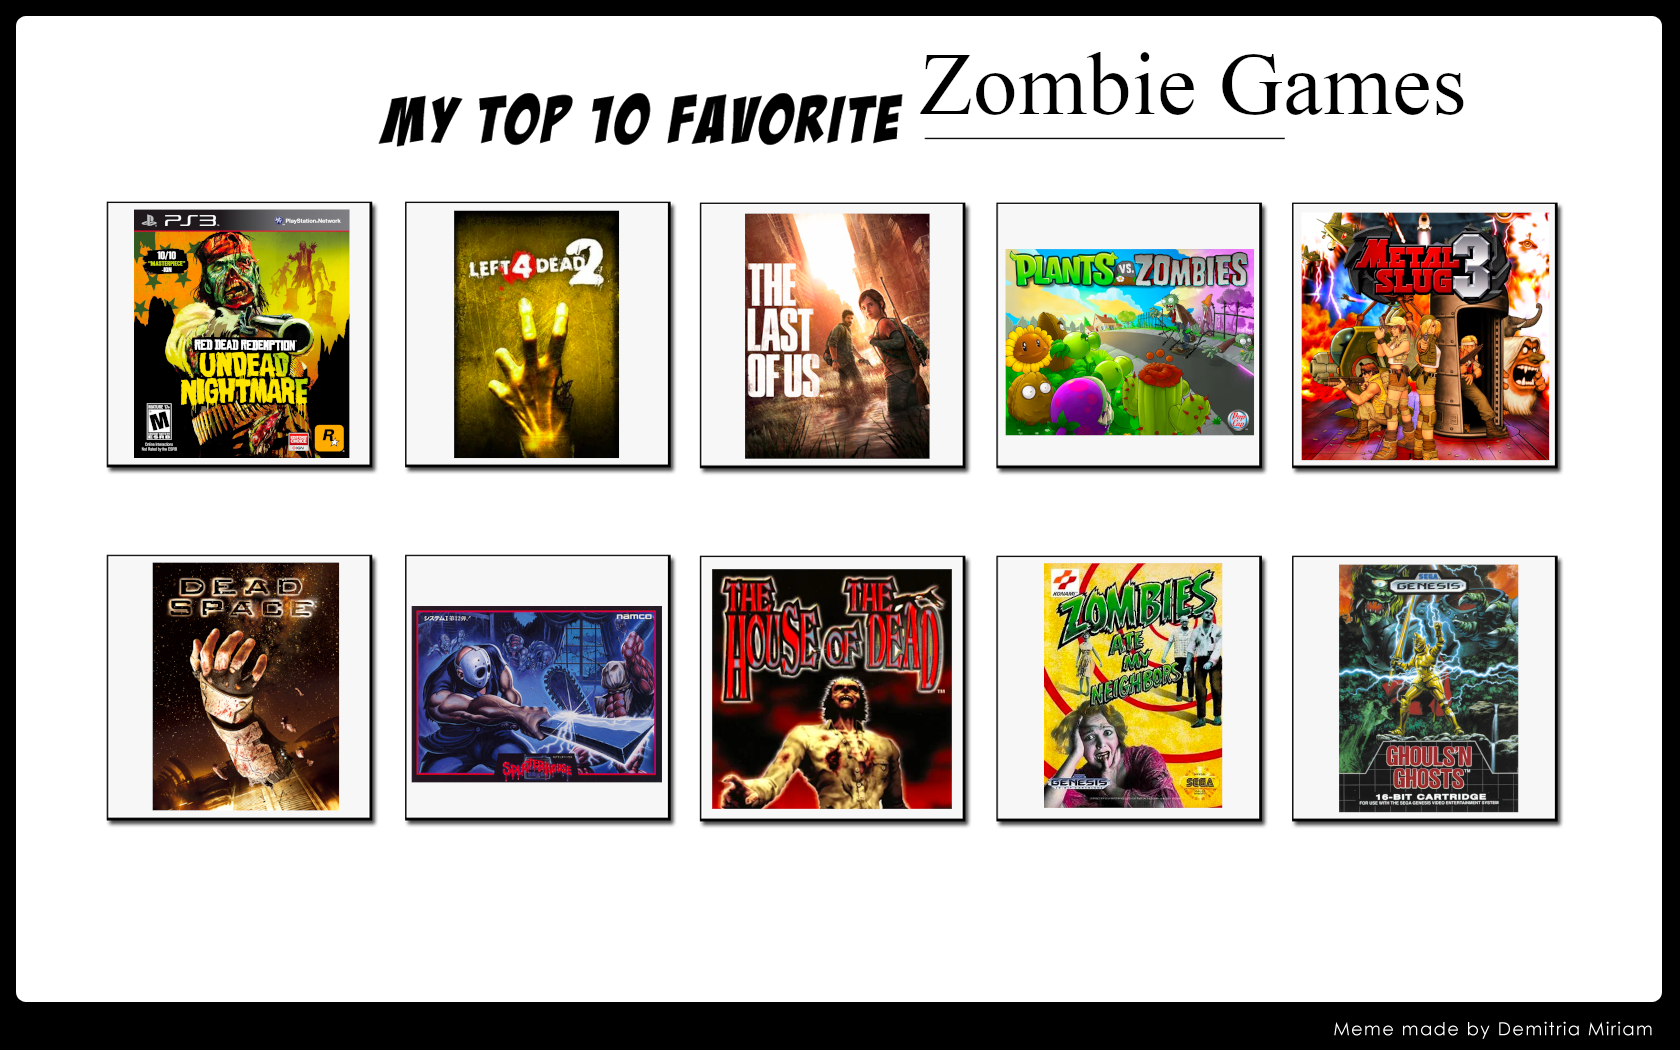 Top 5 Zombie Games